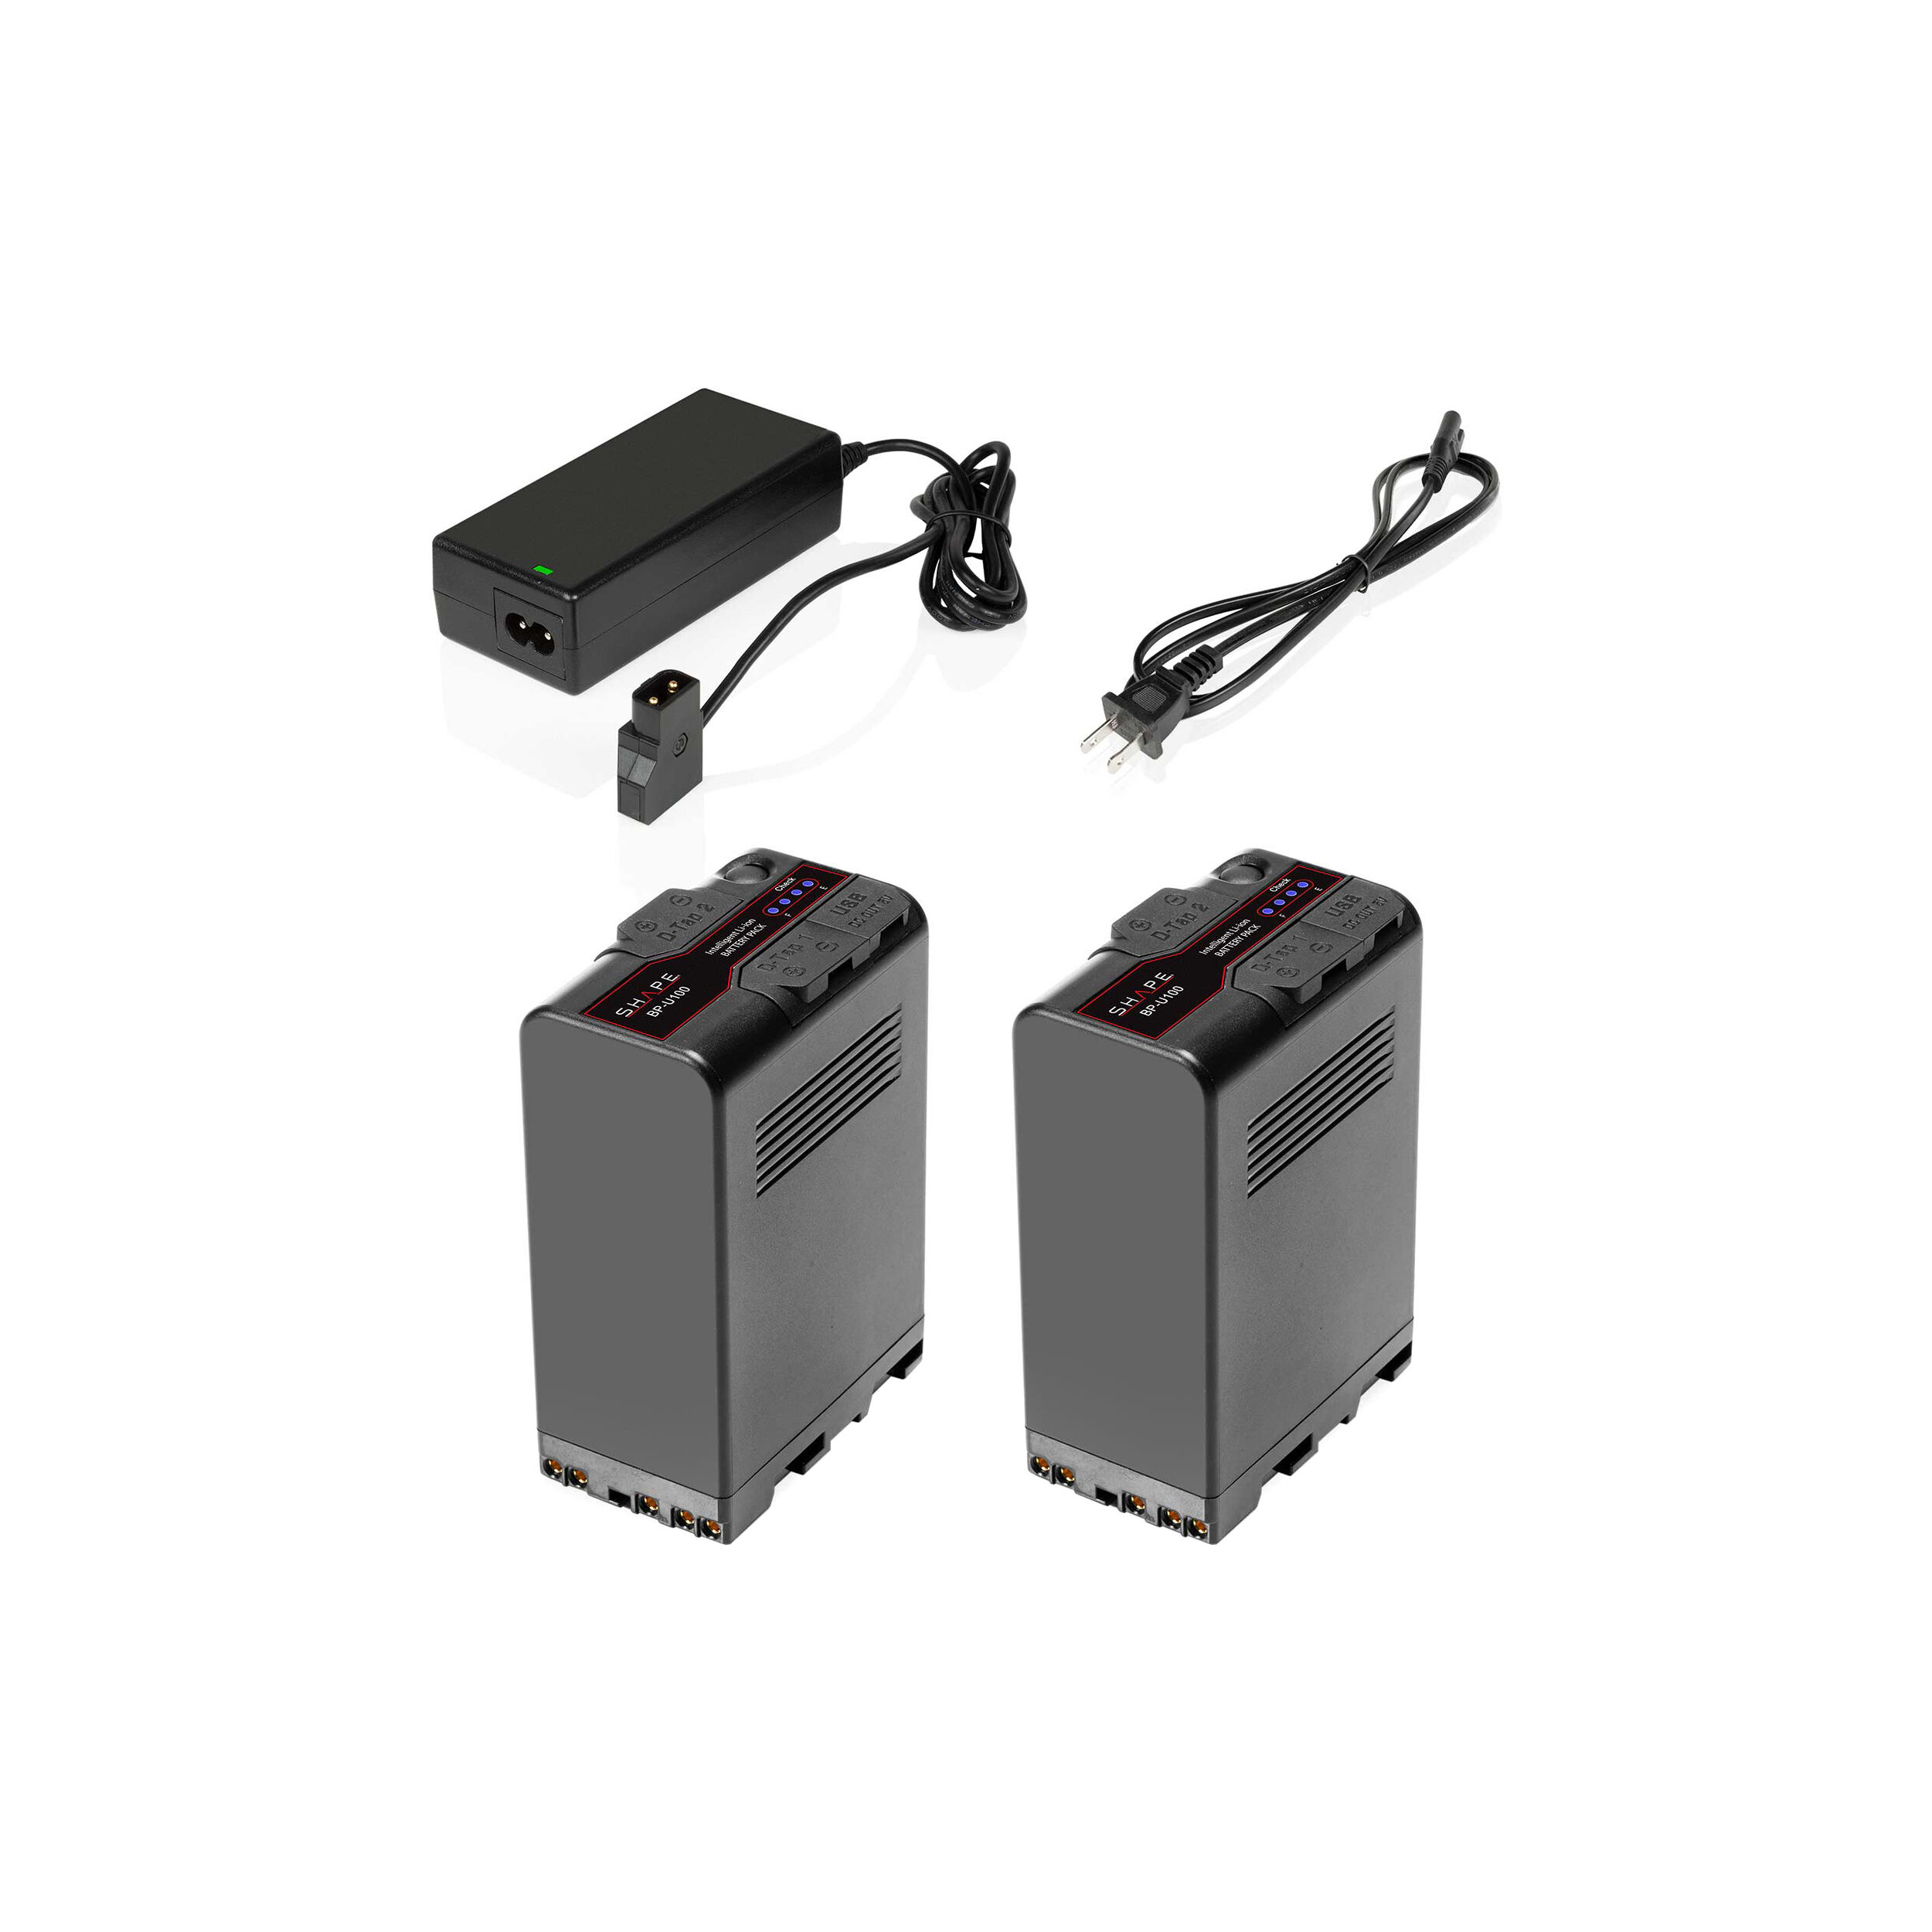 SHAPE Dual BP-U100 Lithium-Ion Batteries with Portable D-Tap Battery